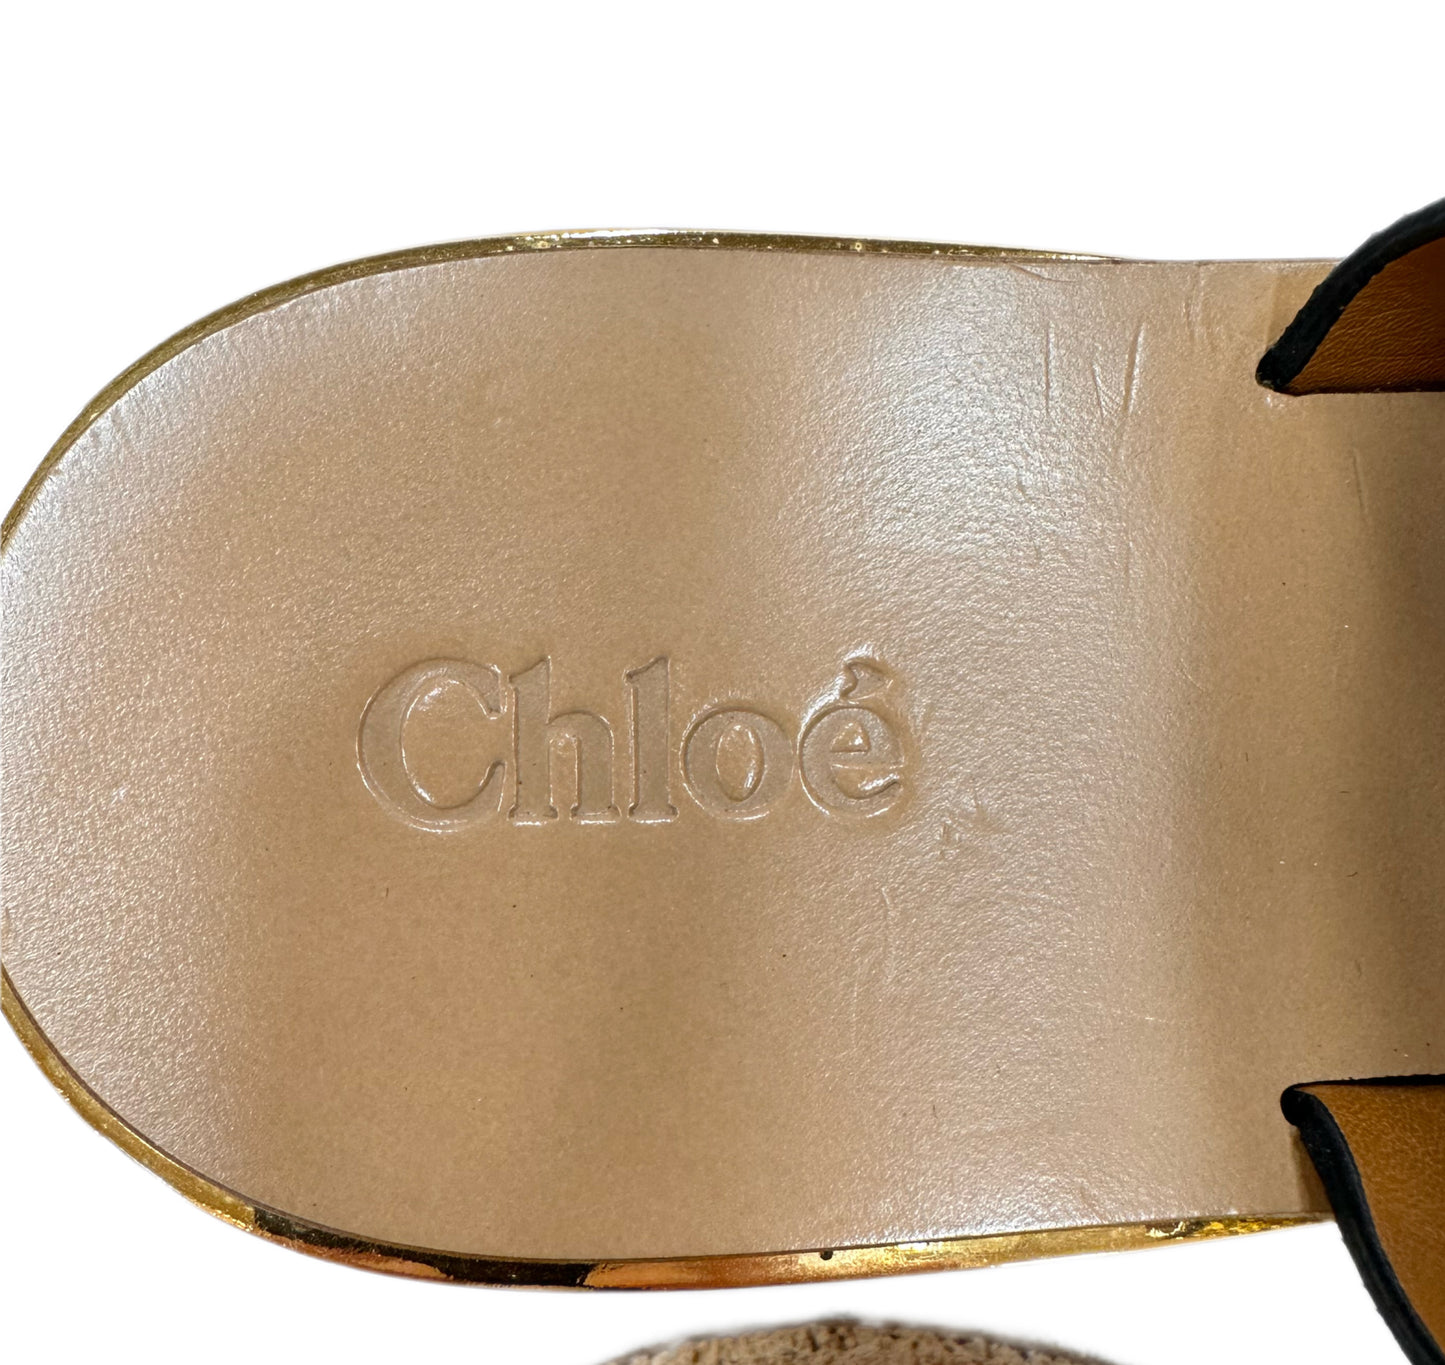 CHLOE Gold Metallic Slide Size 35